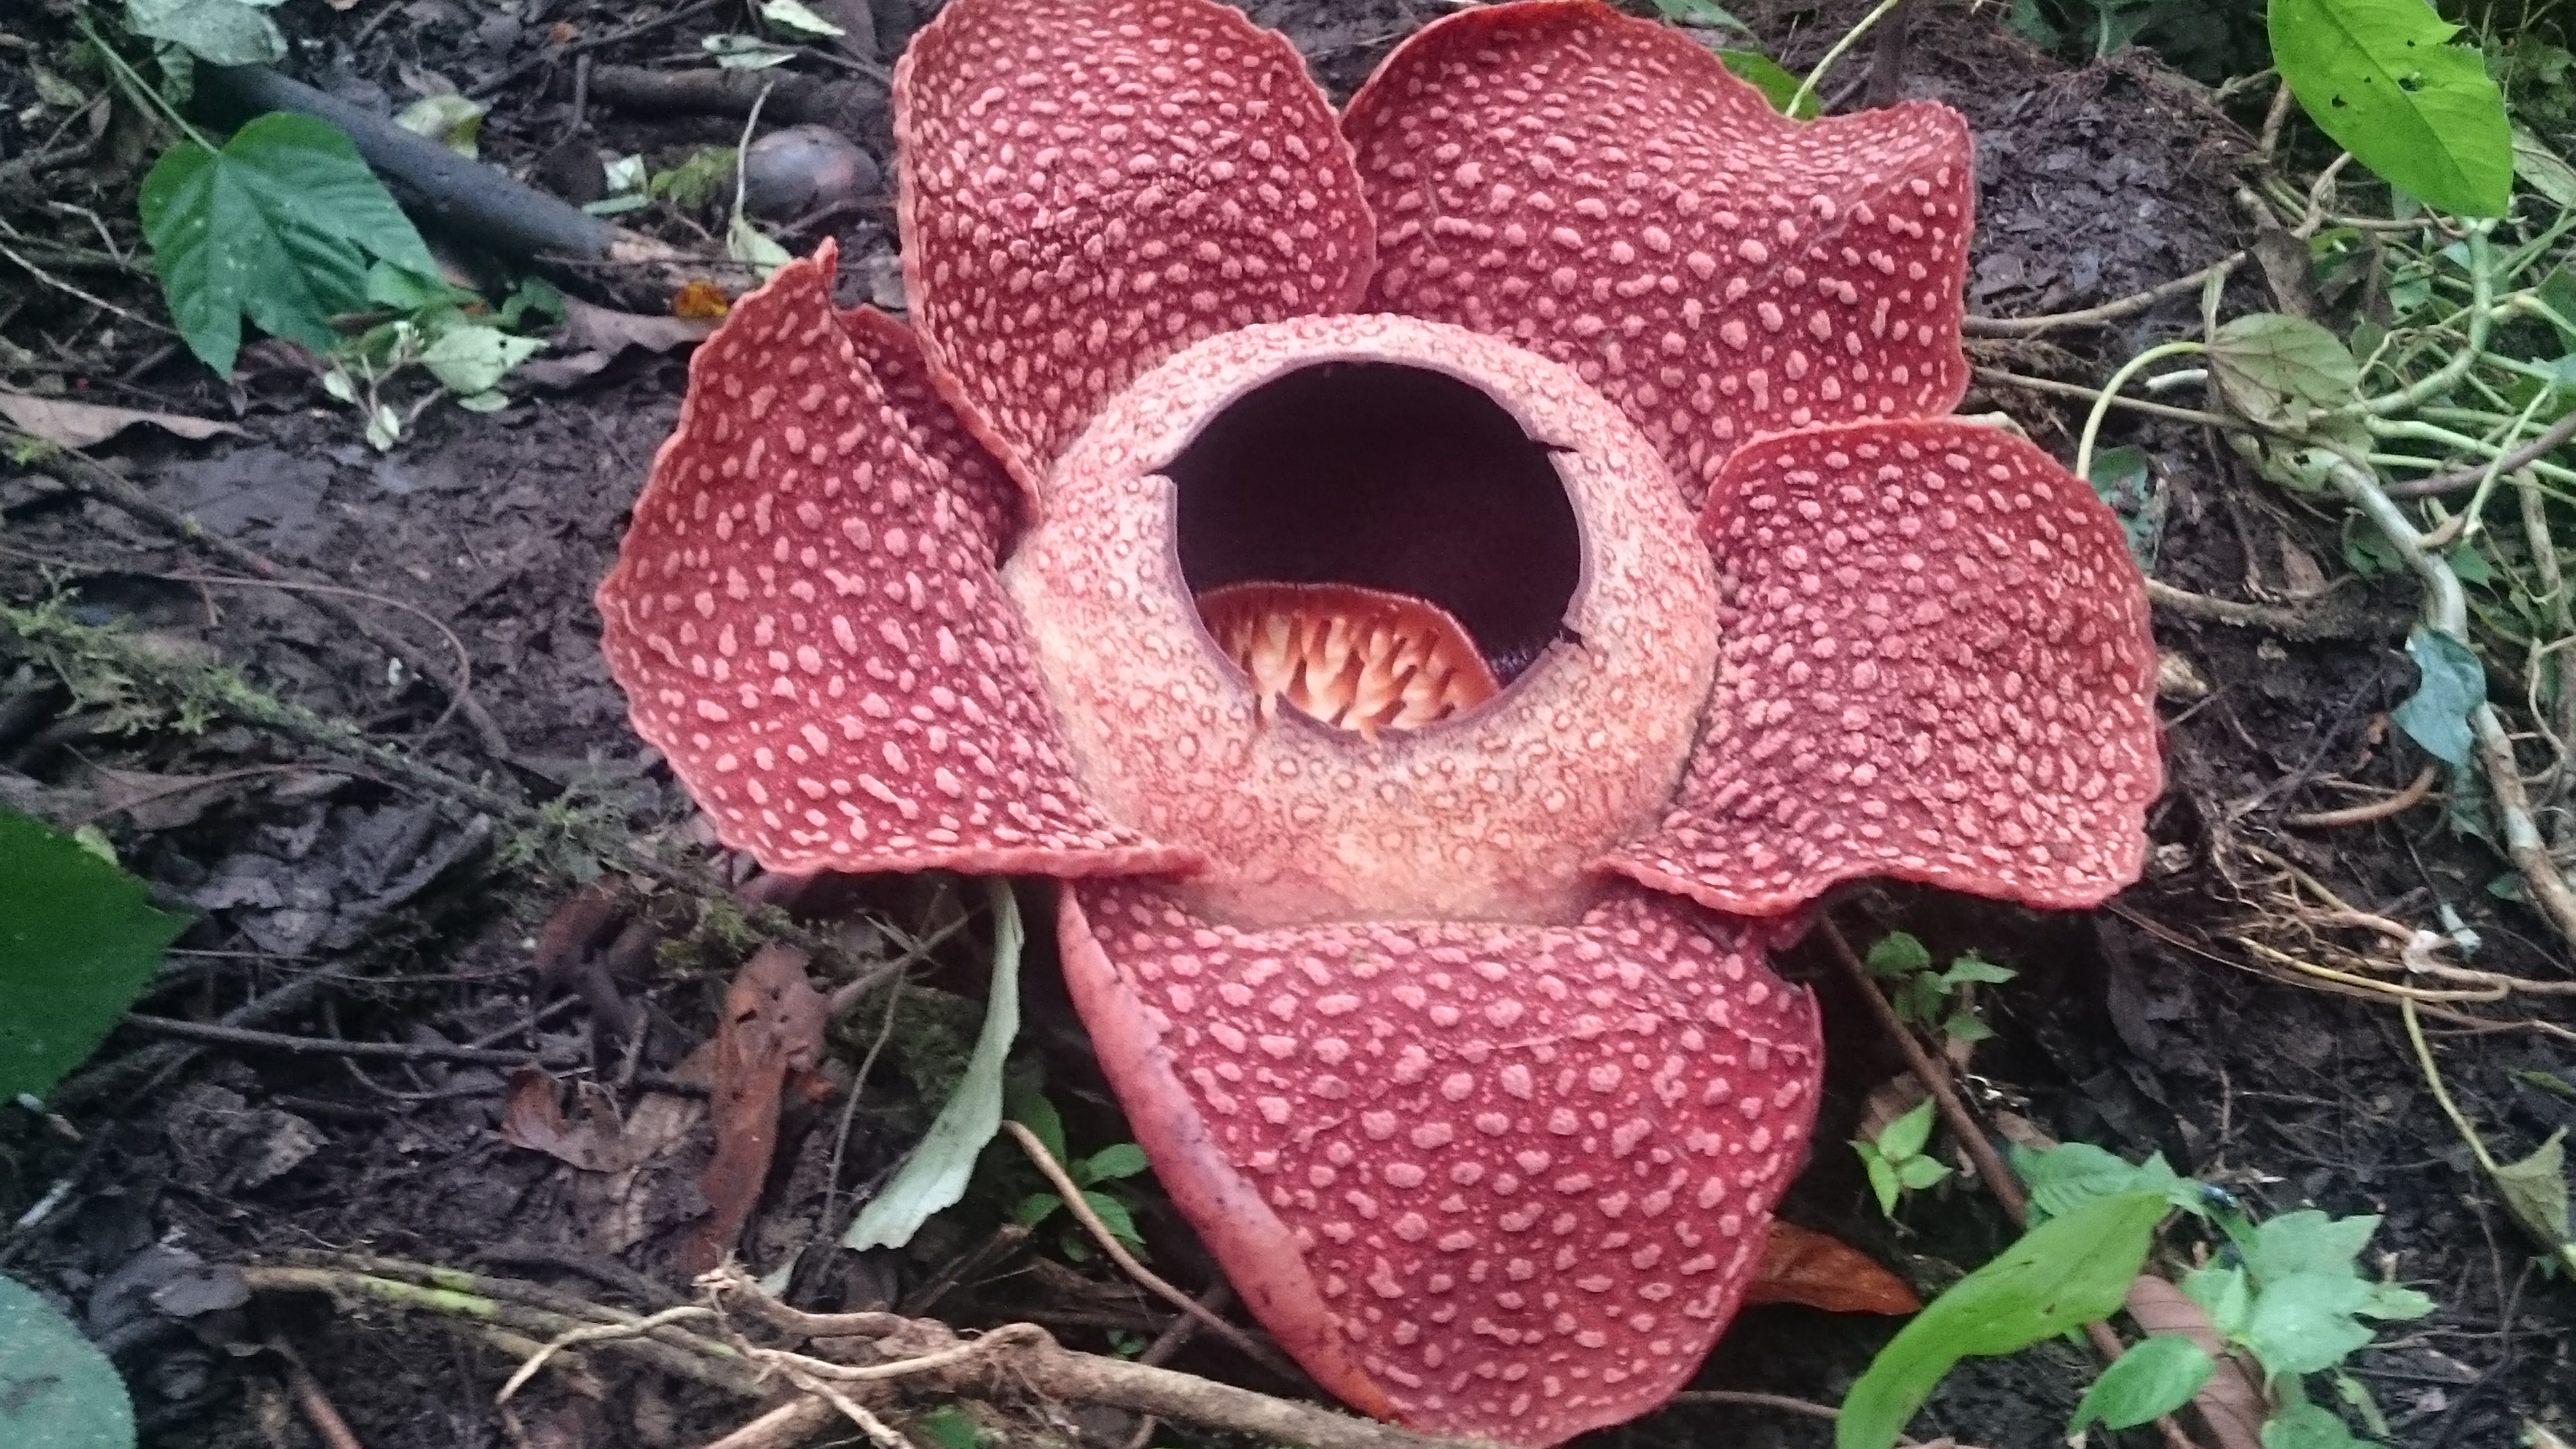 Berasal mana dari rafflesia bunga Republik Indonesia